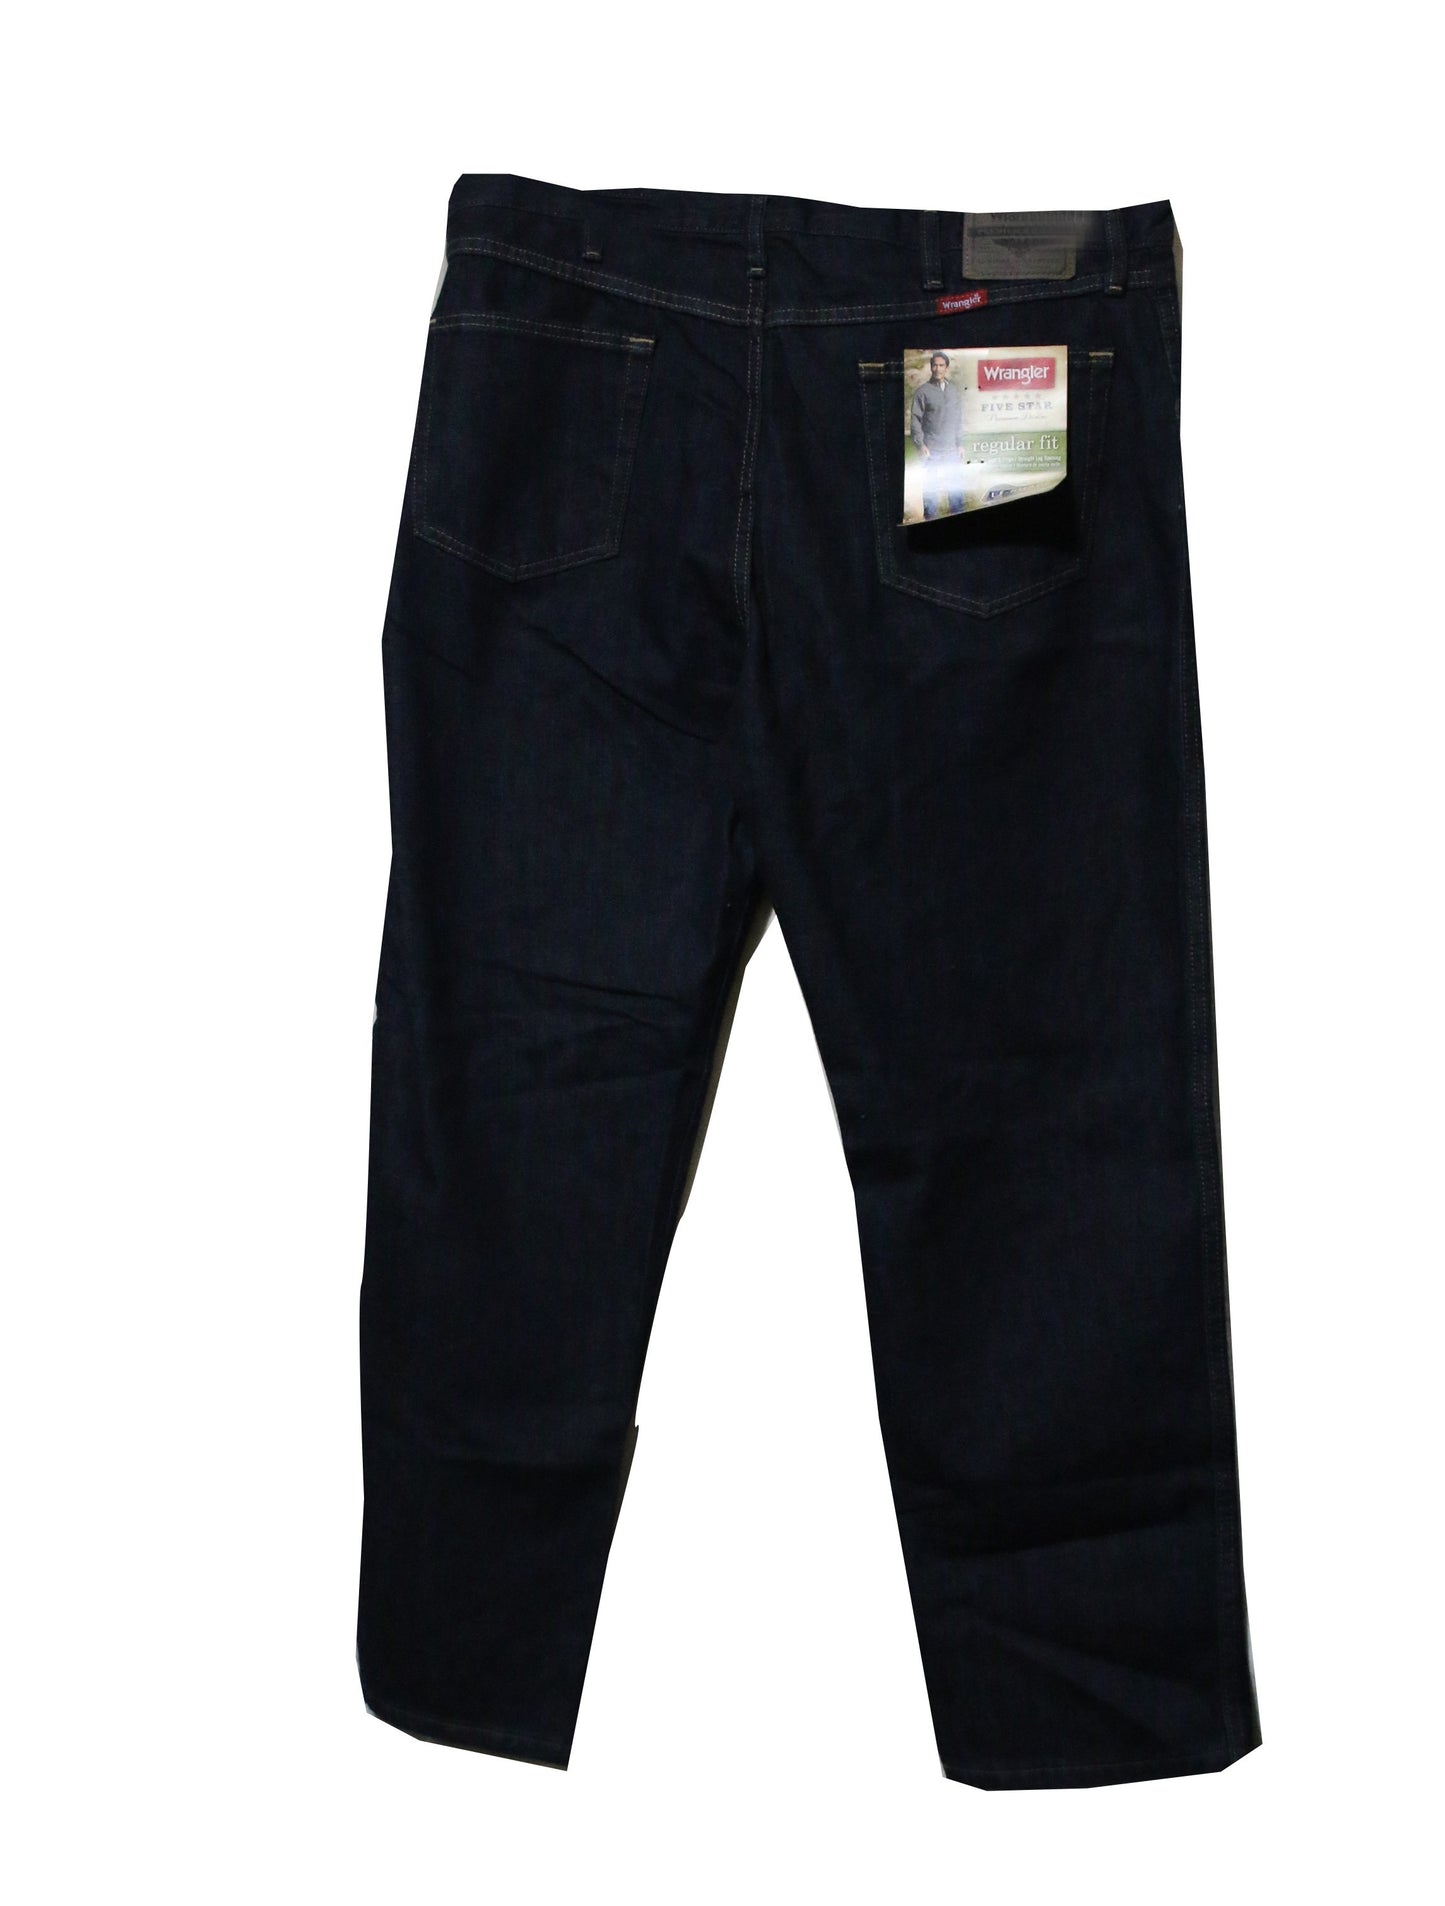 Men's Wrangler Five Star Premium Demin Regular Fit Jeans